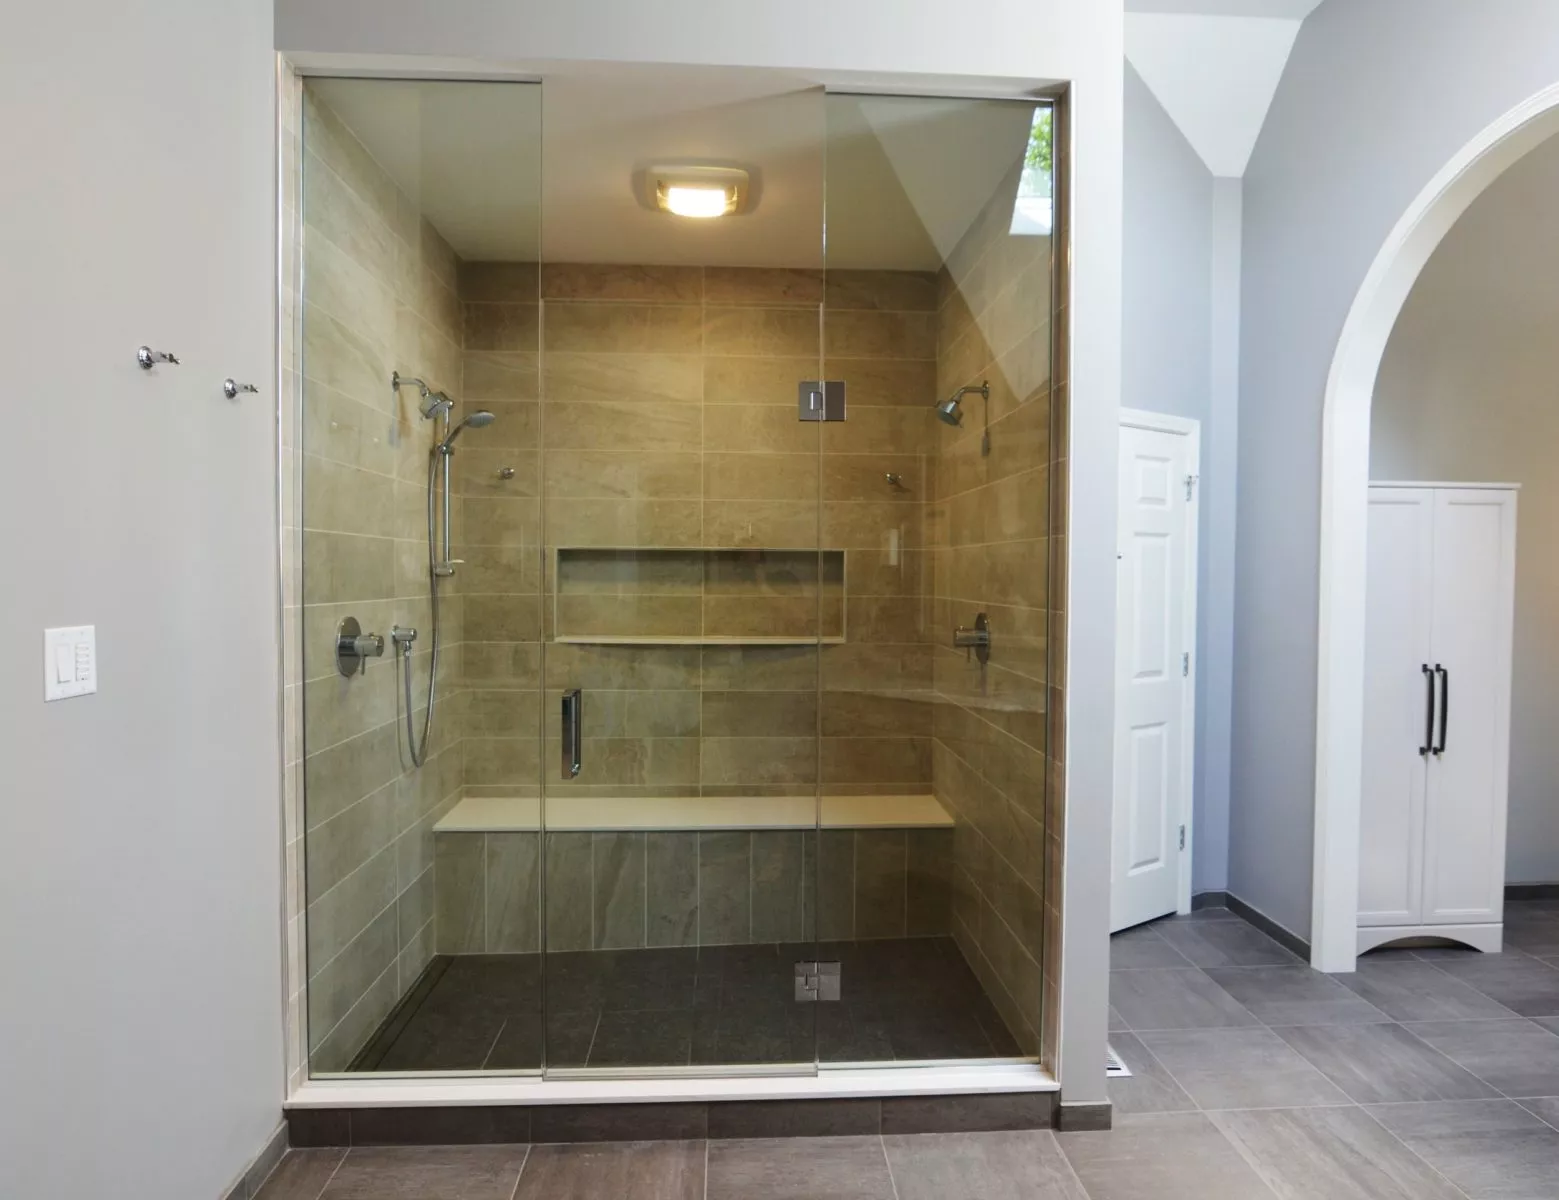 kitchen remodel large glass door shower with tile double shower head tile floor the kitchen master